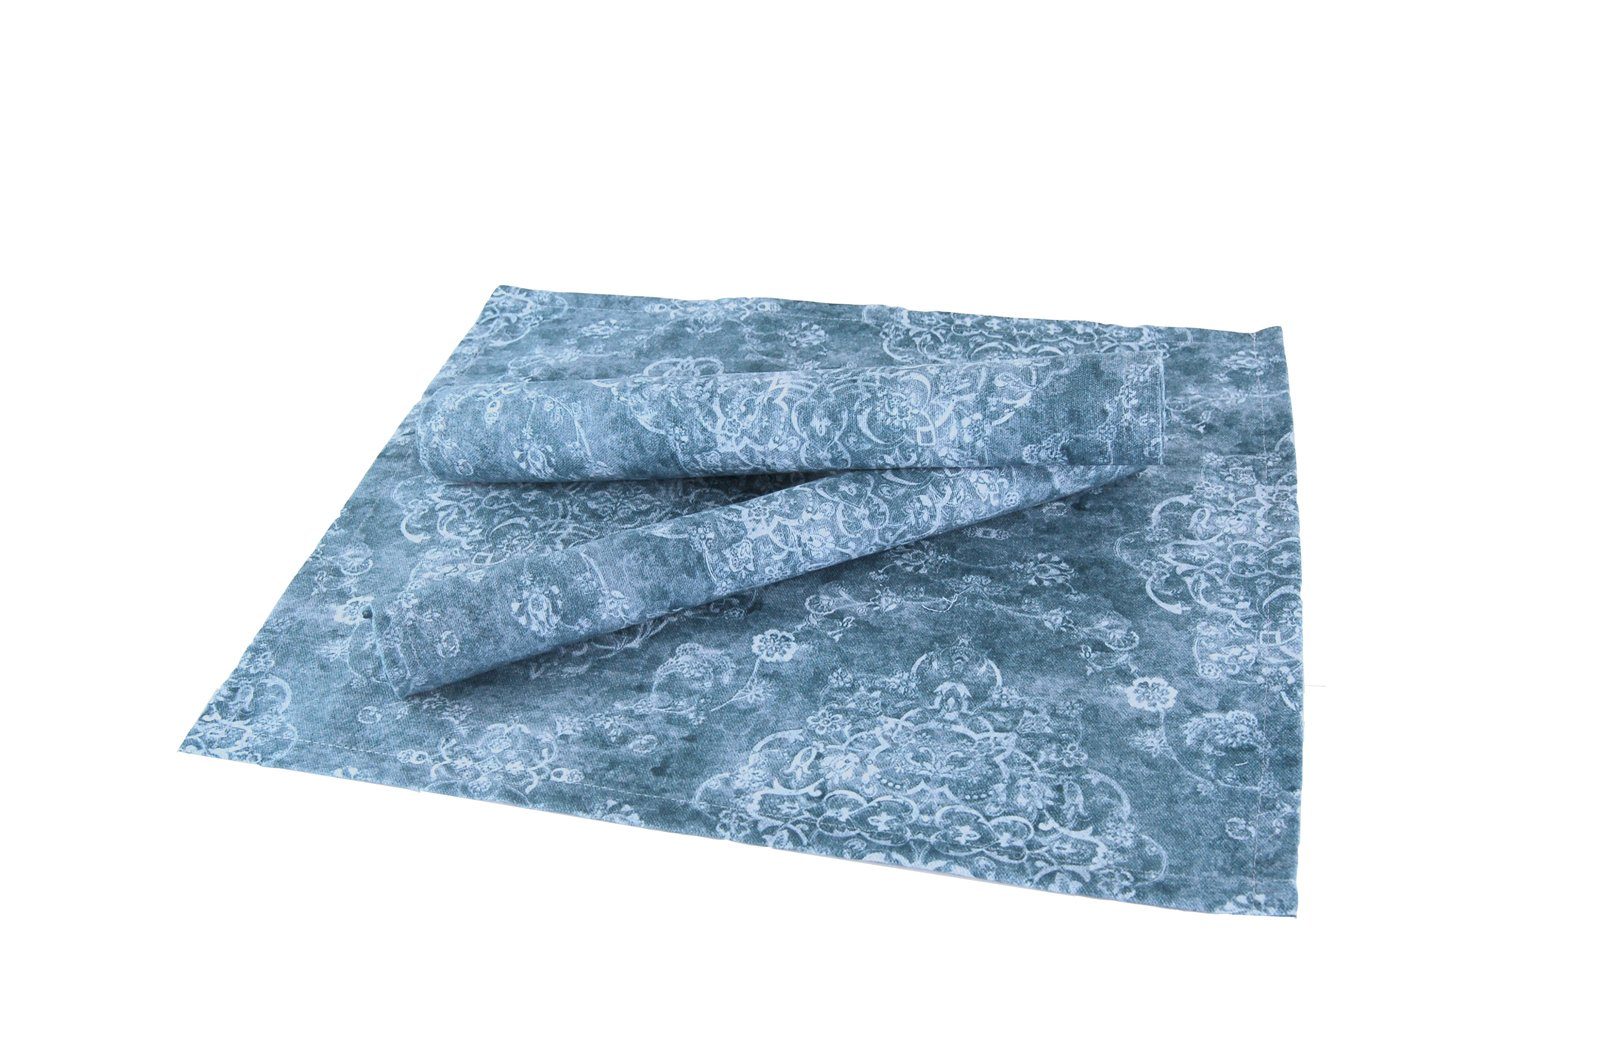 ca. Batik-Look Jeans-blau beties, Platzset), Stück (1 Ritual, Tischdeko Tischset Platzset, wellness-blau cm Ornamente 35x45